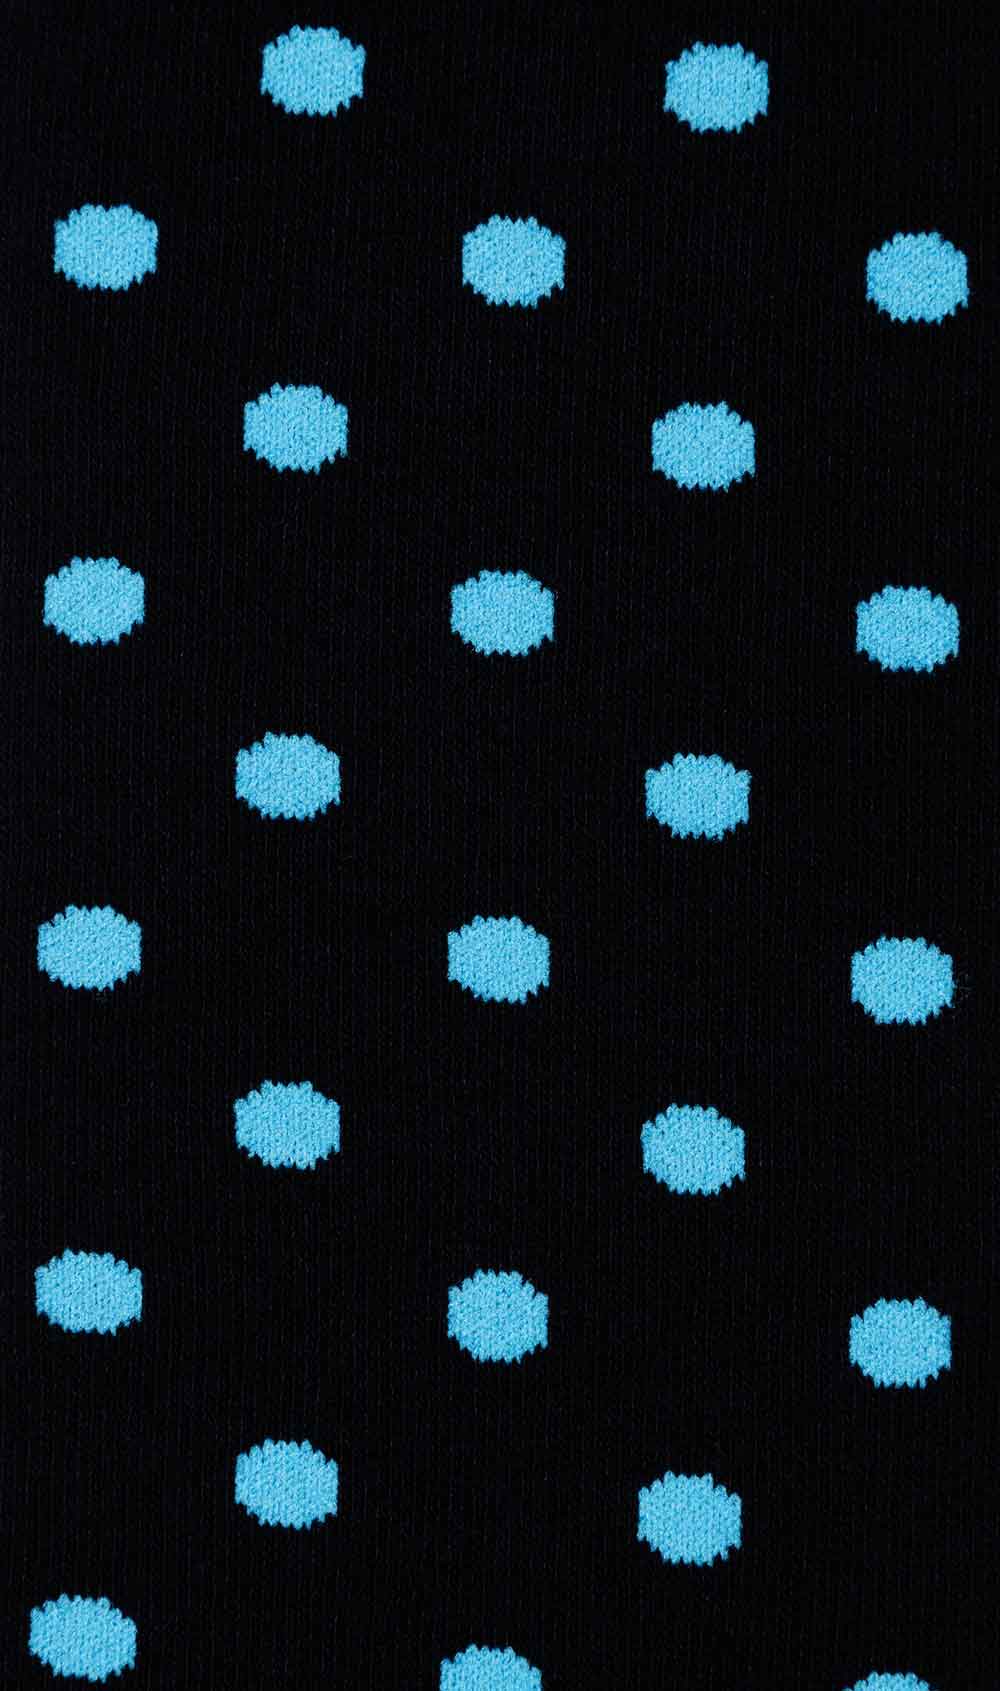 Midnight on Blue Dot Socks Fabric